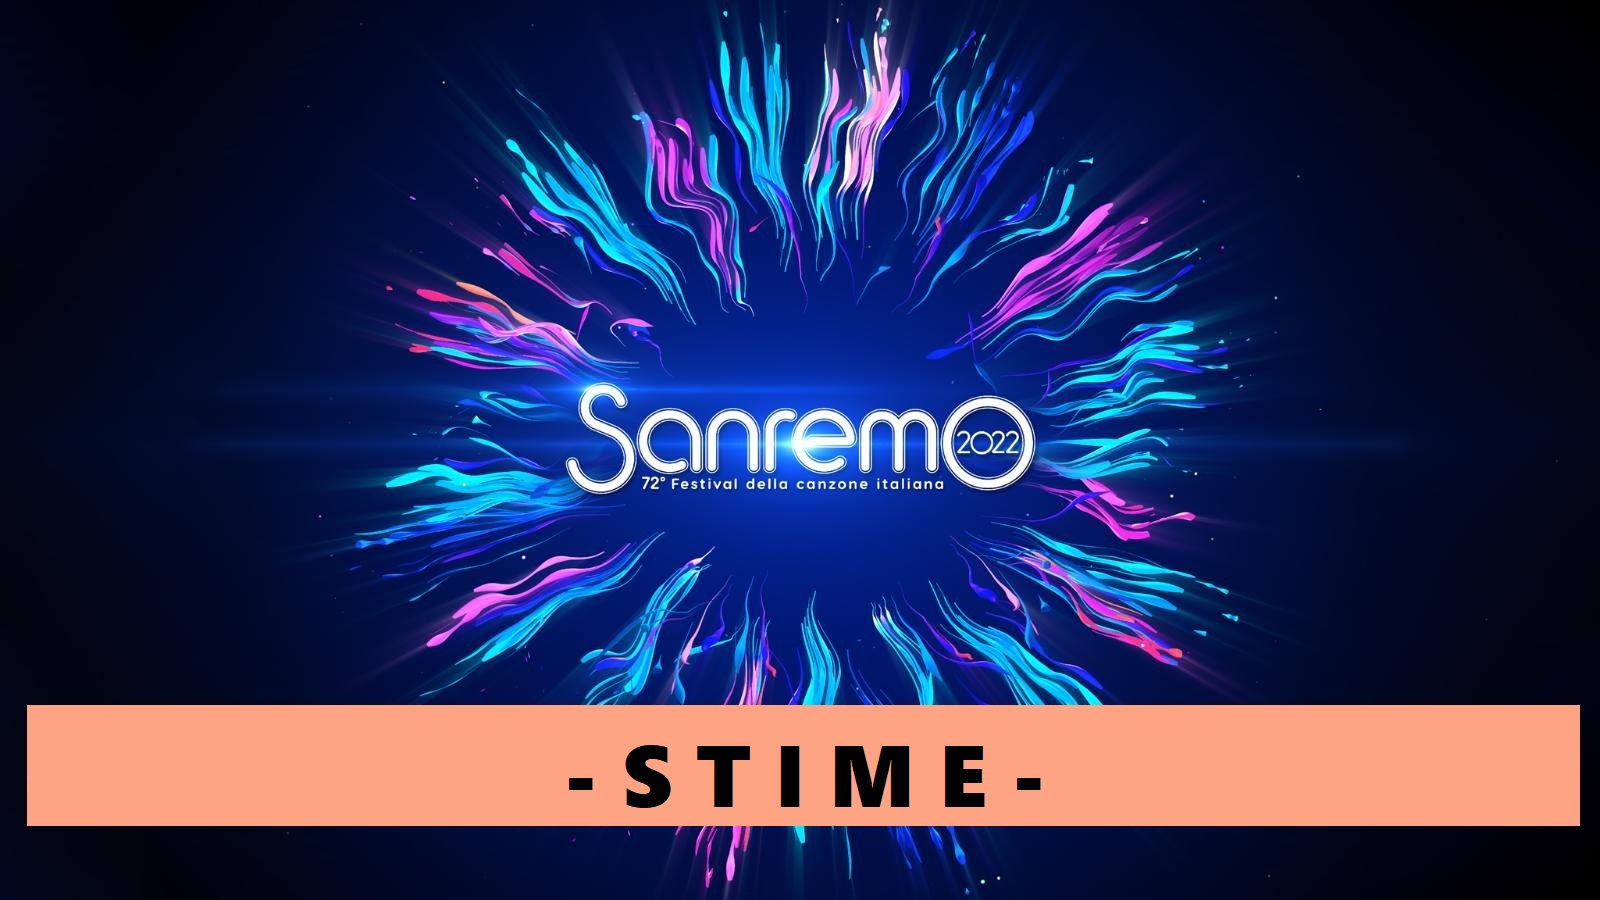 Sanremo 2022 Stime